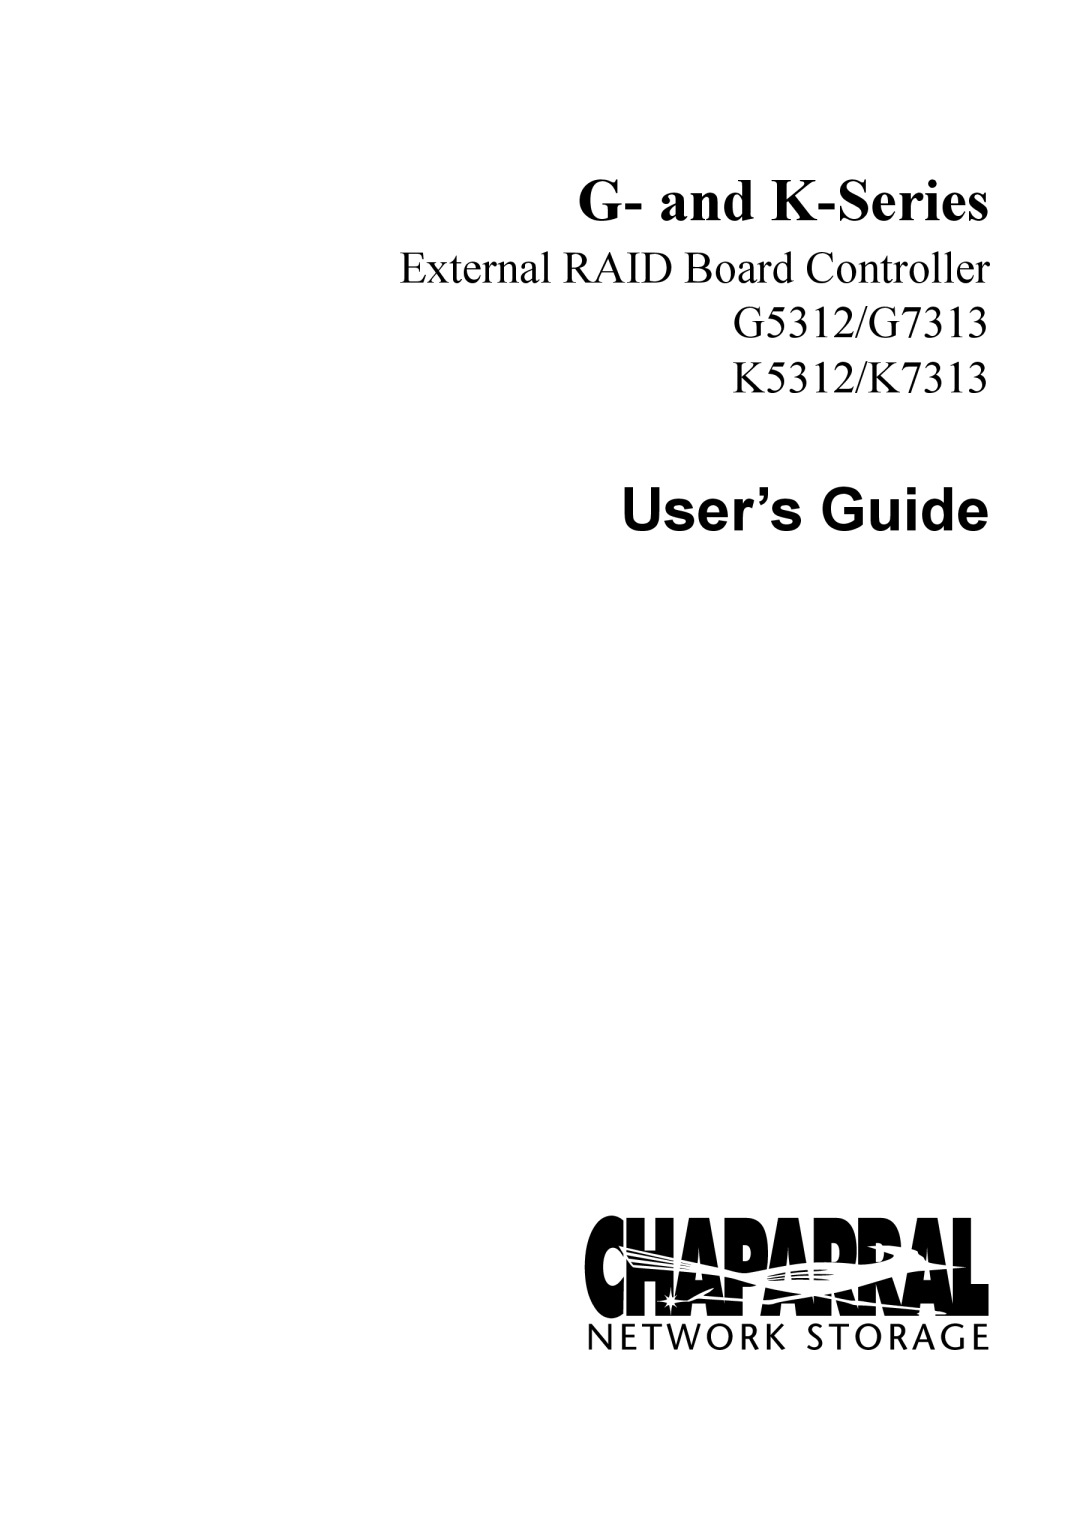 Chaparral G5312/G7313, K5312/K7313 manual User’s Guide 